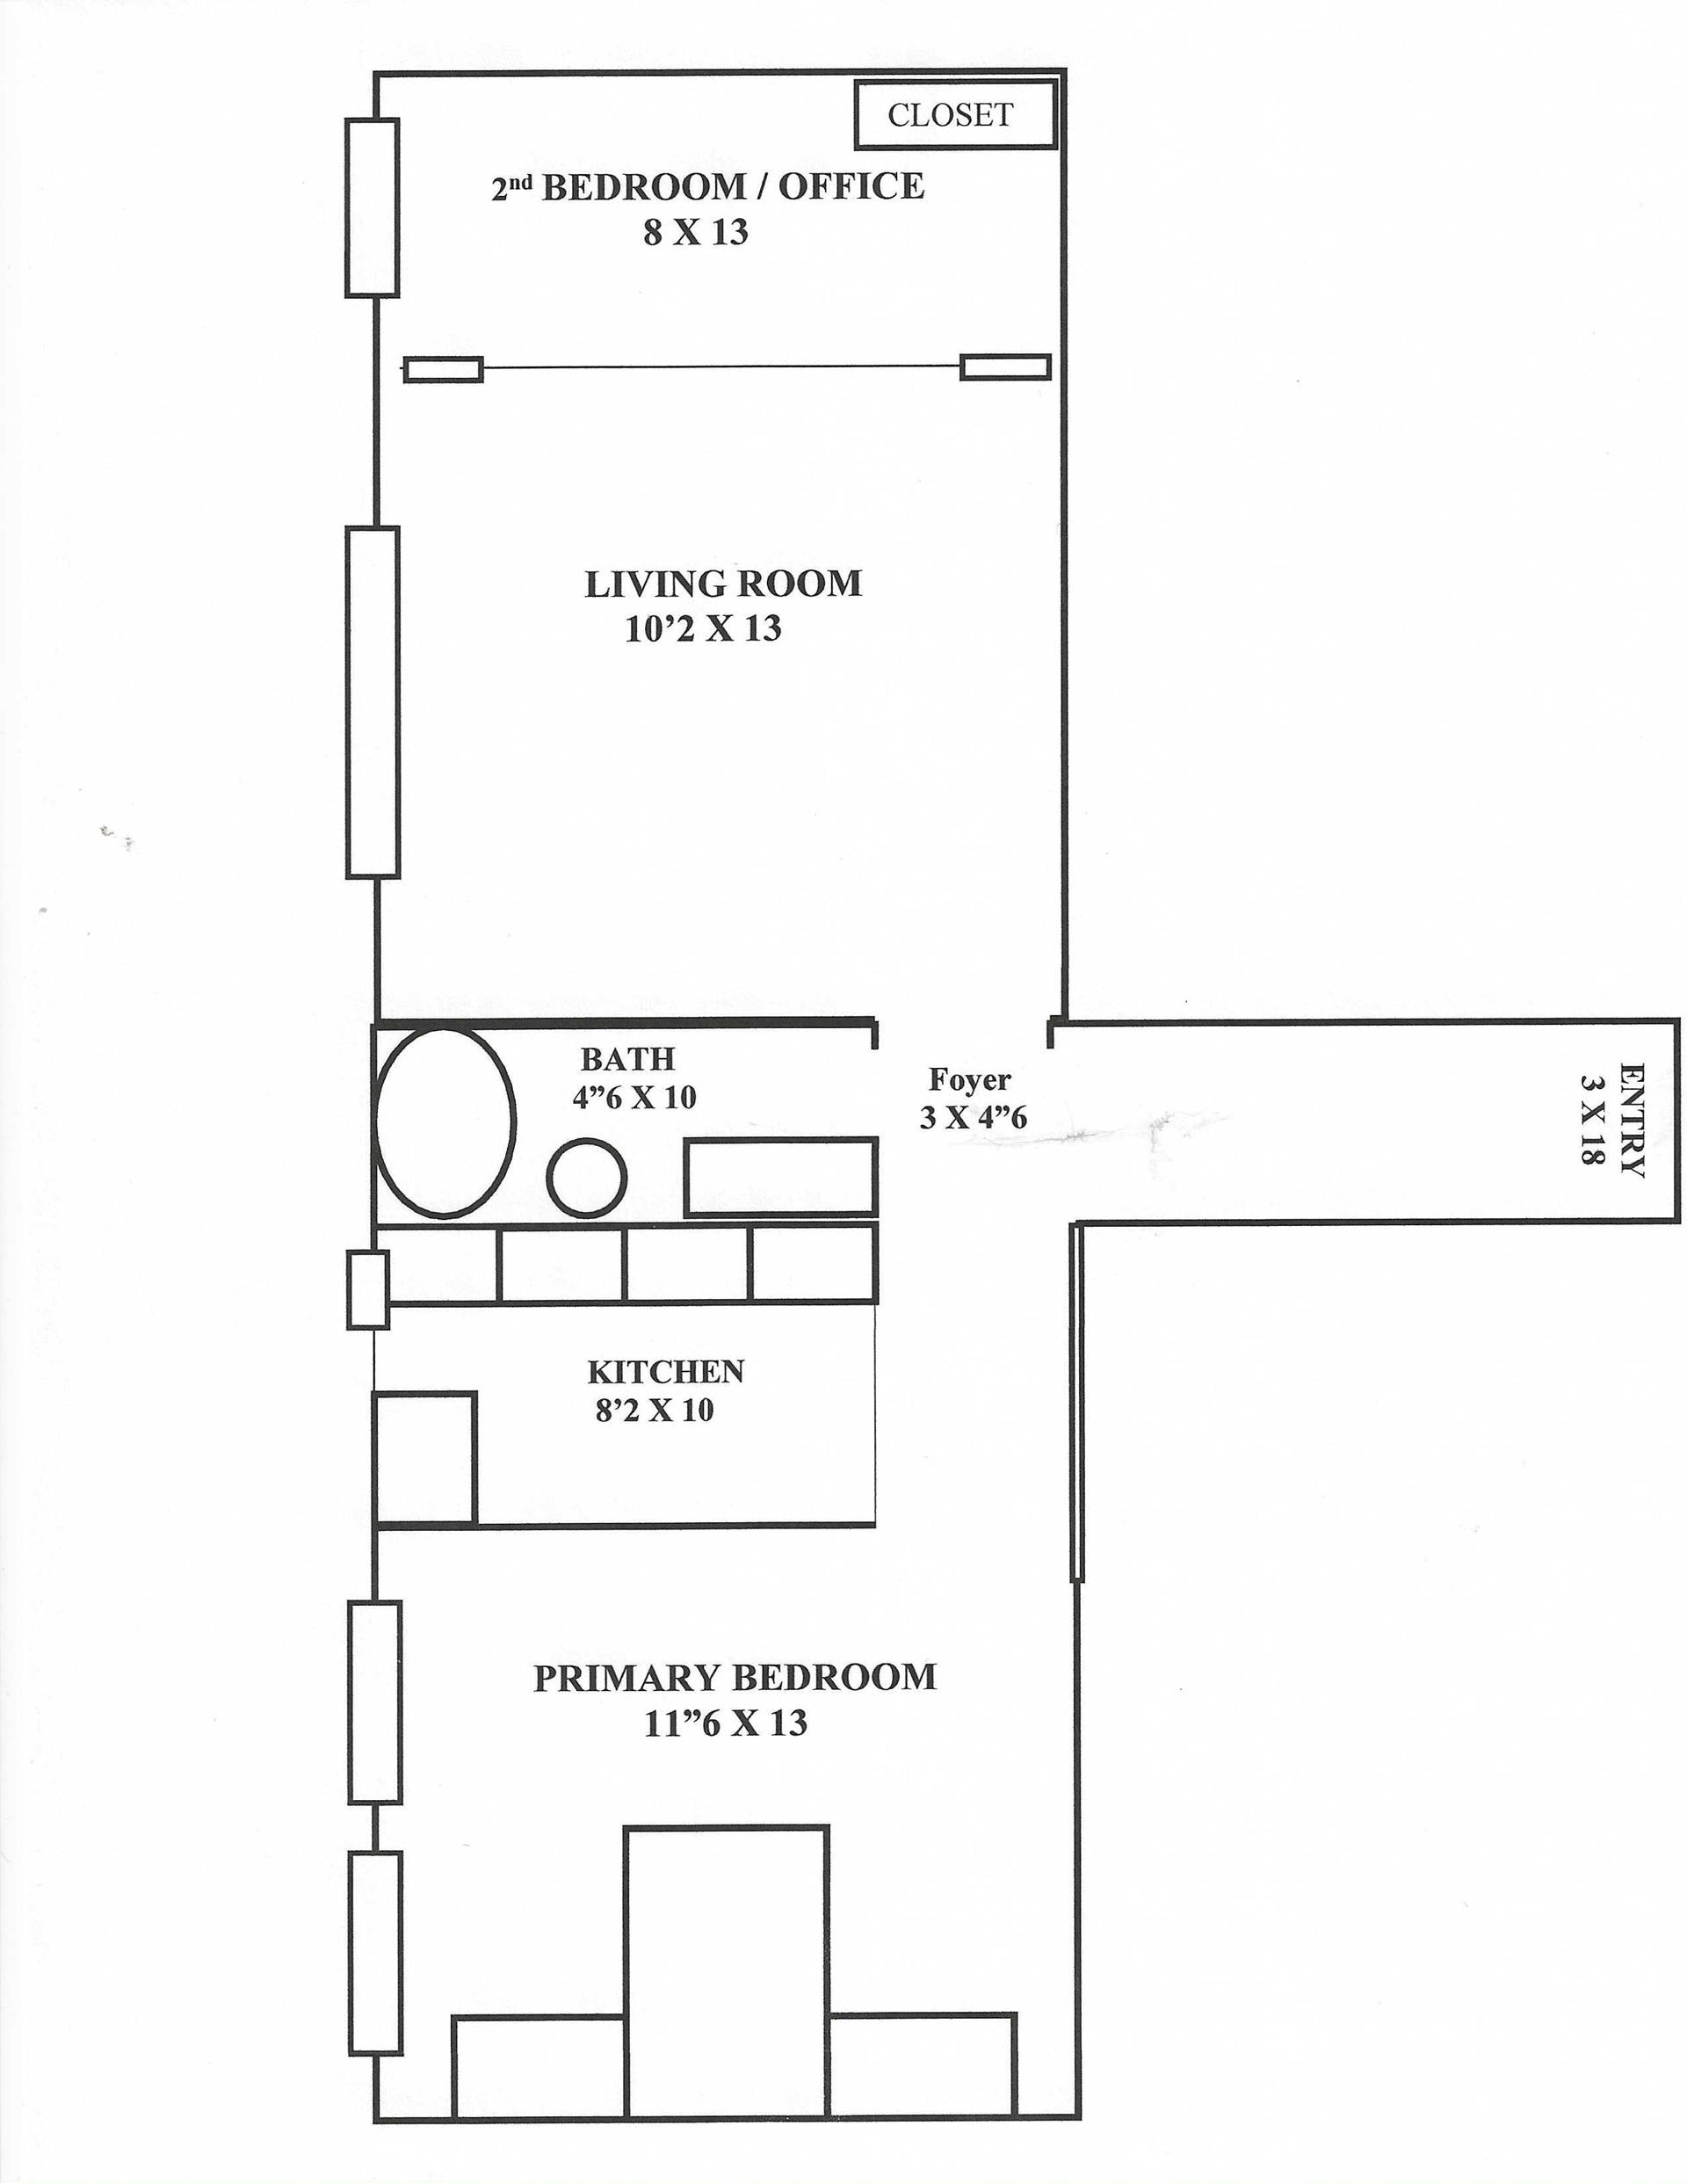 Floorplan for 509 West 122nd Street, 14